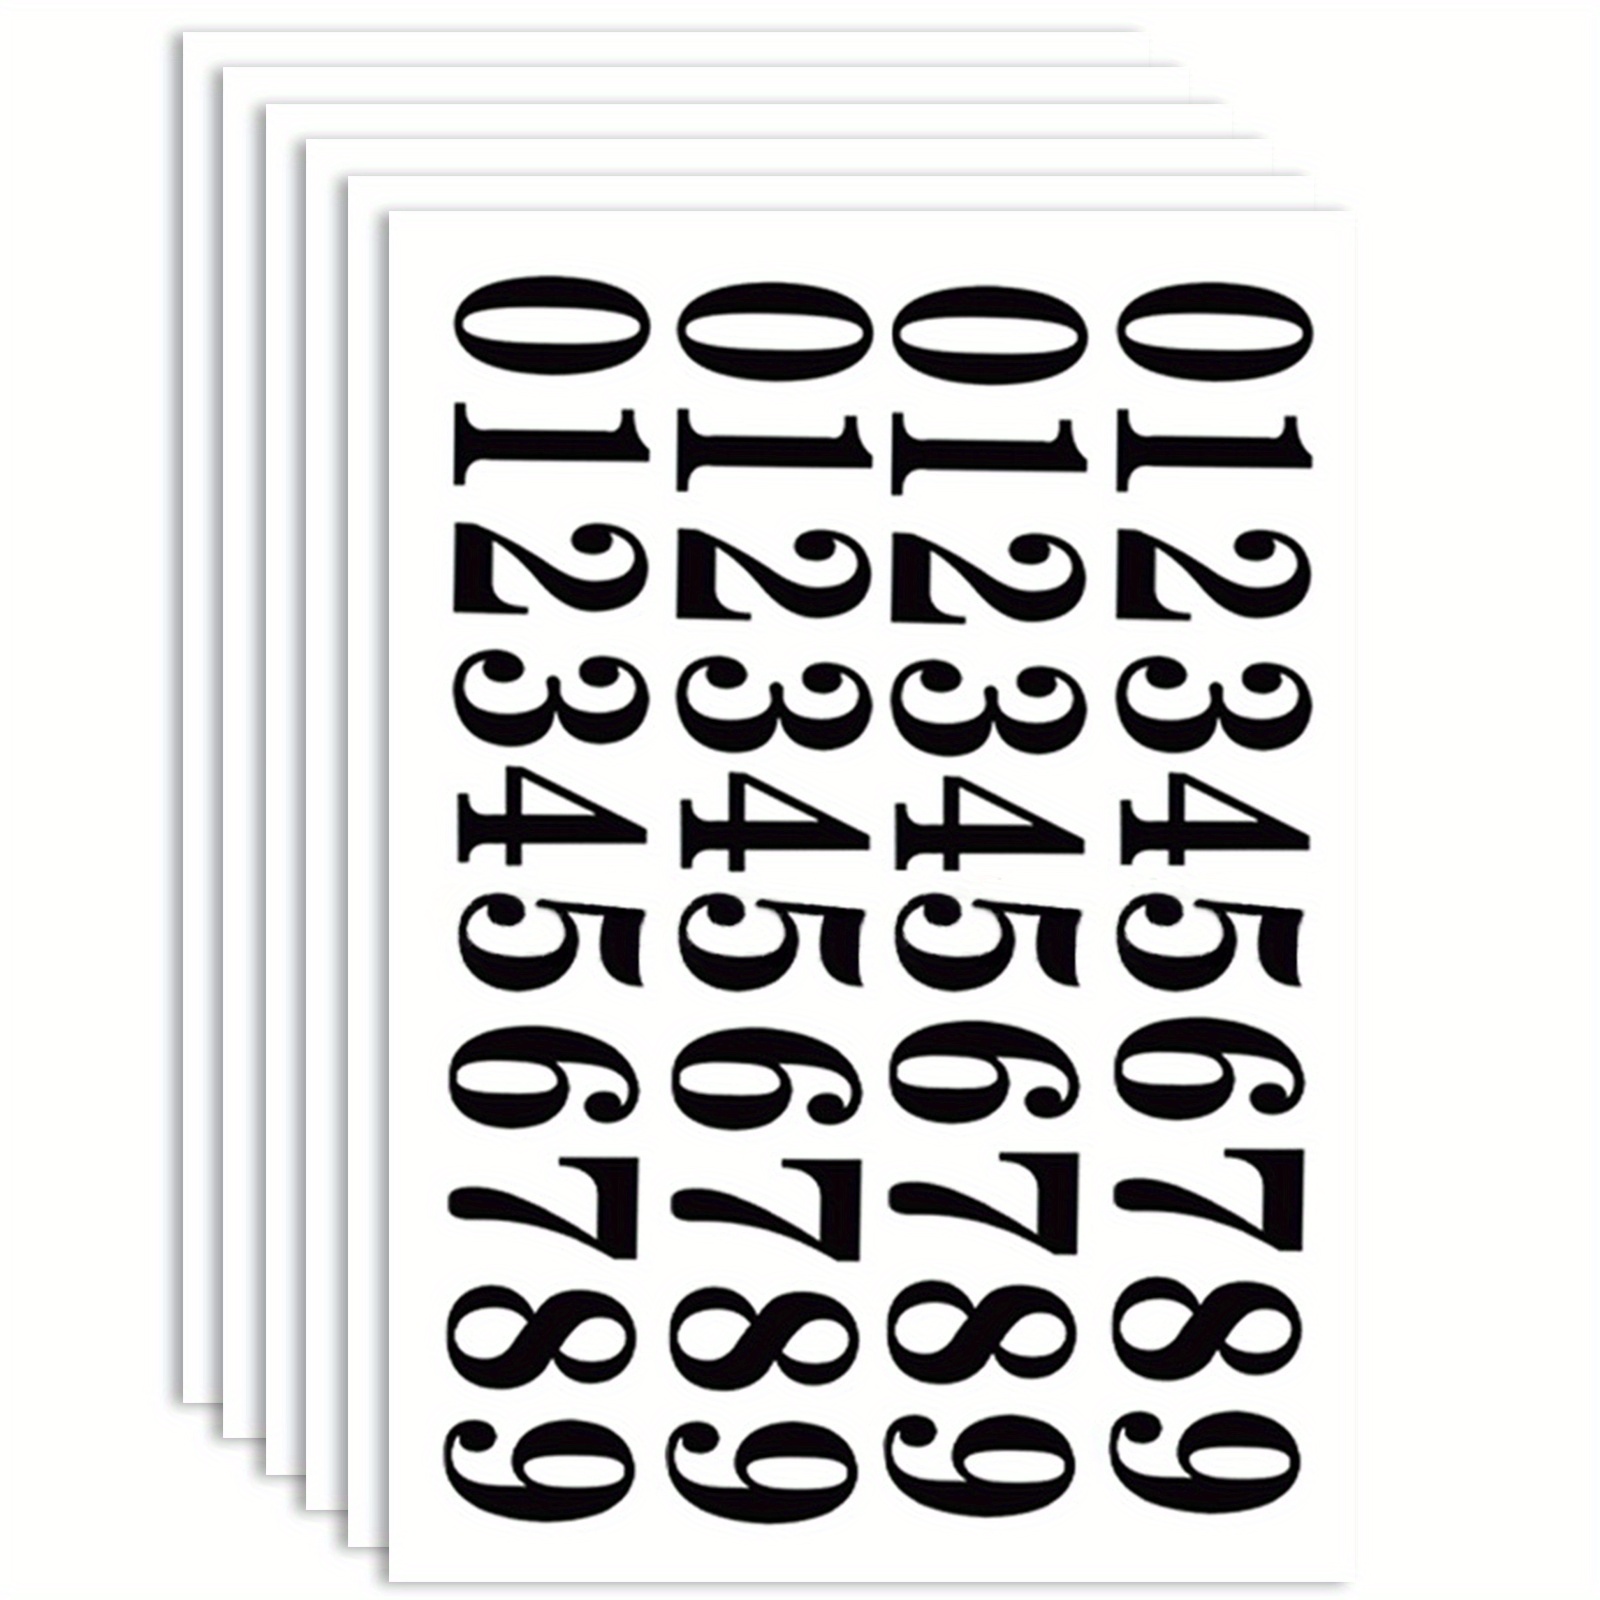 40 Pieces, 6 - Number Stickers, Waterproof Vinyl Stick On Numbers - Black